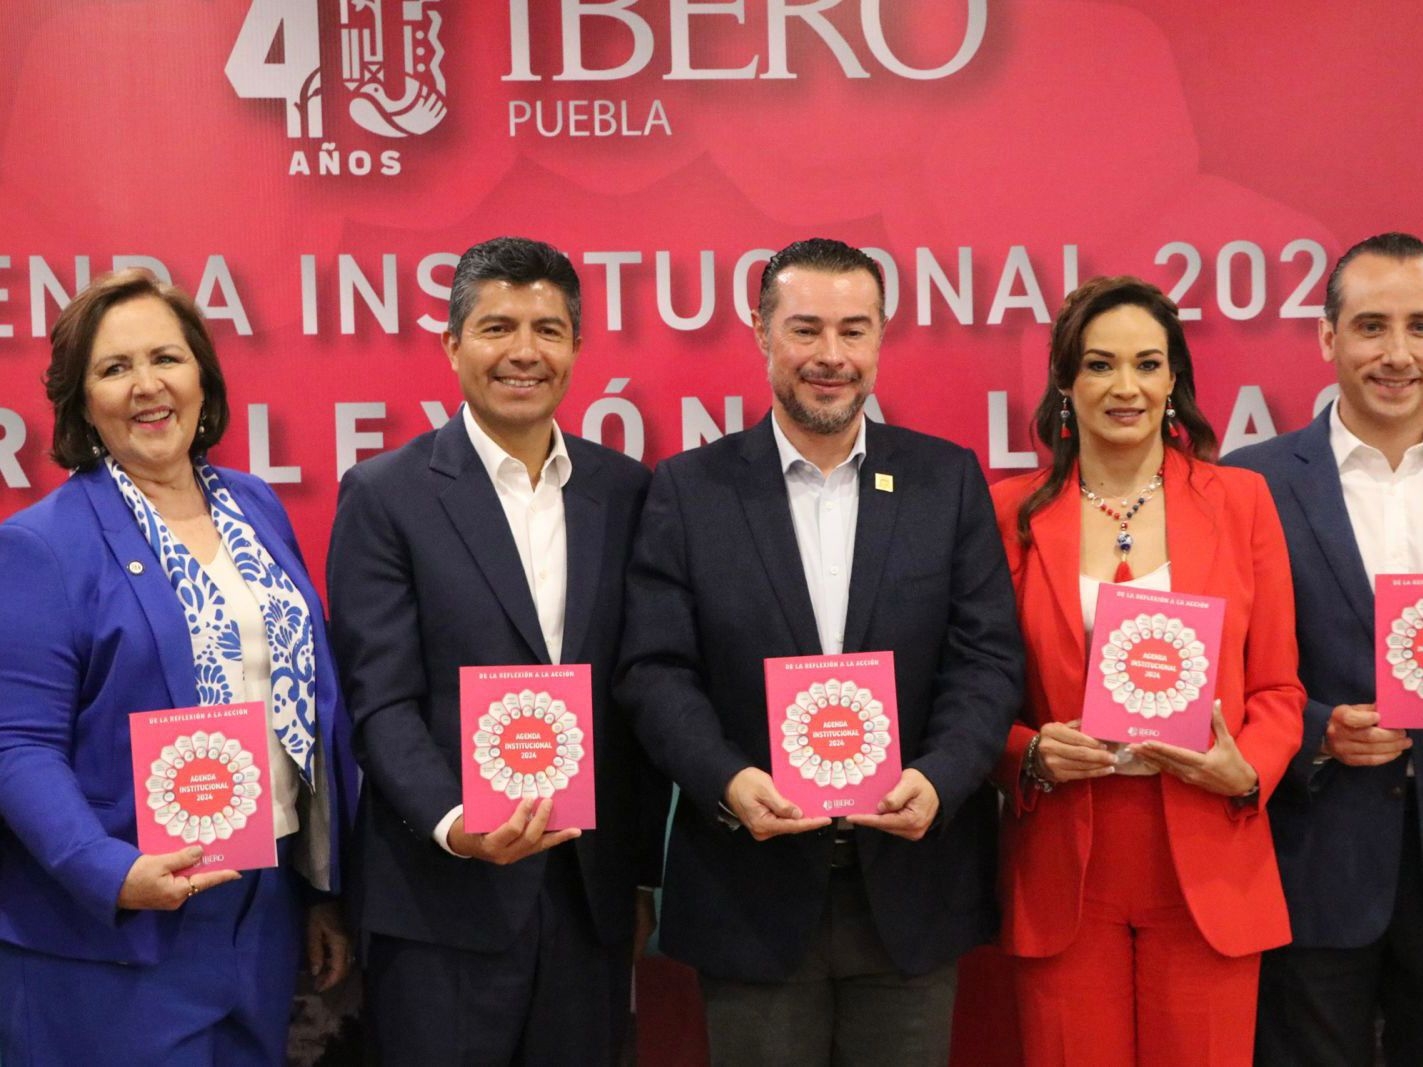 IBERO Puebla presenta ‘Agenda institucional’ a Eduardo Rivera